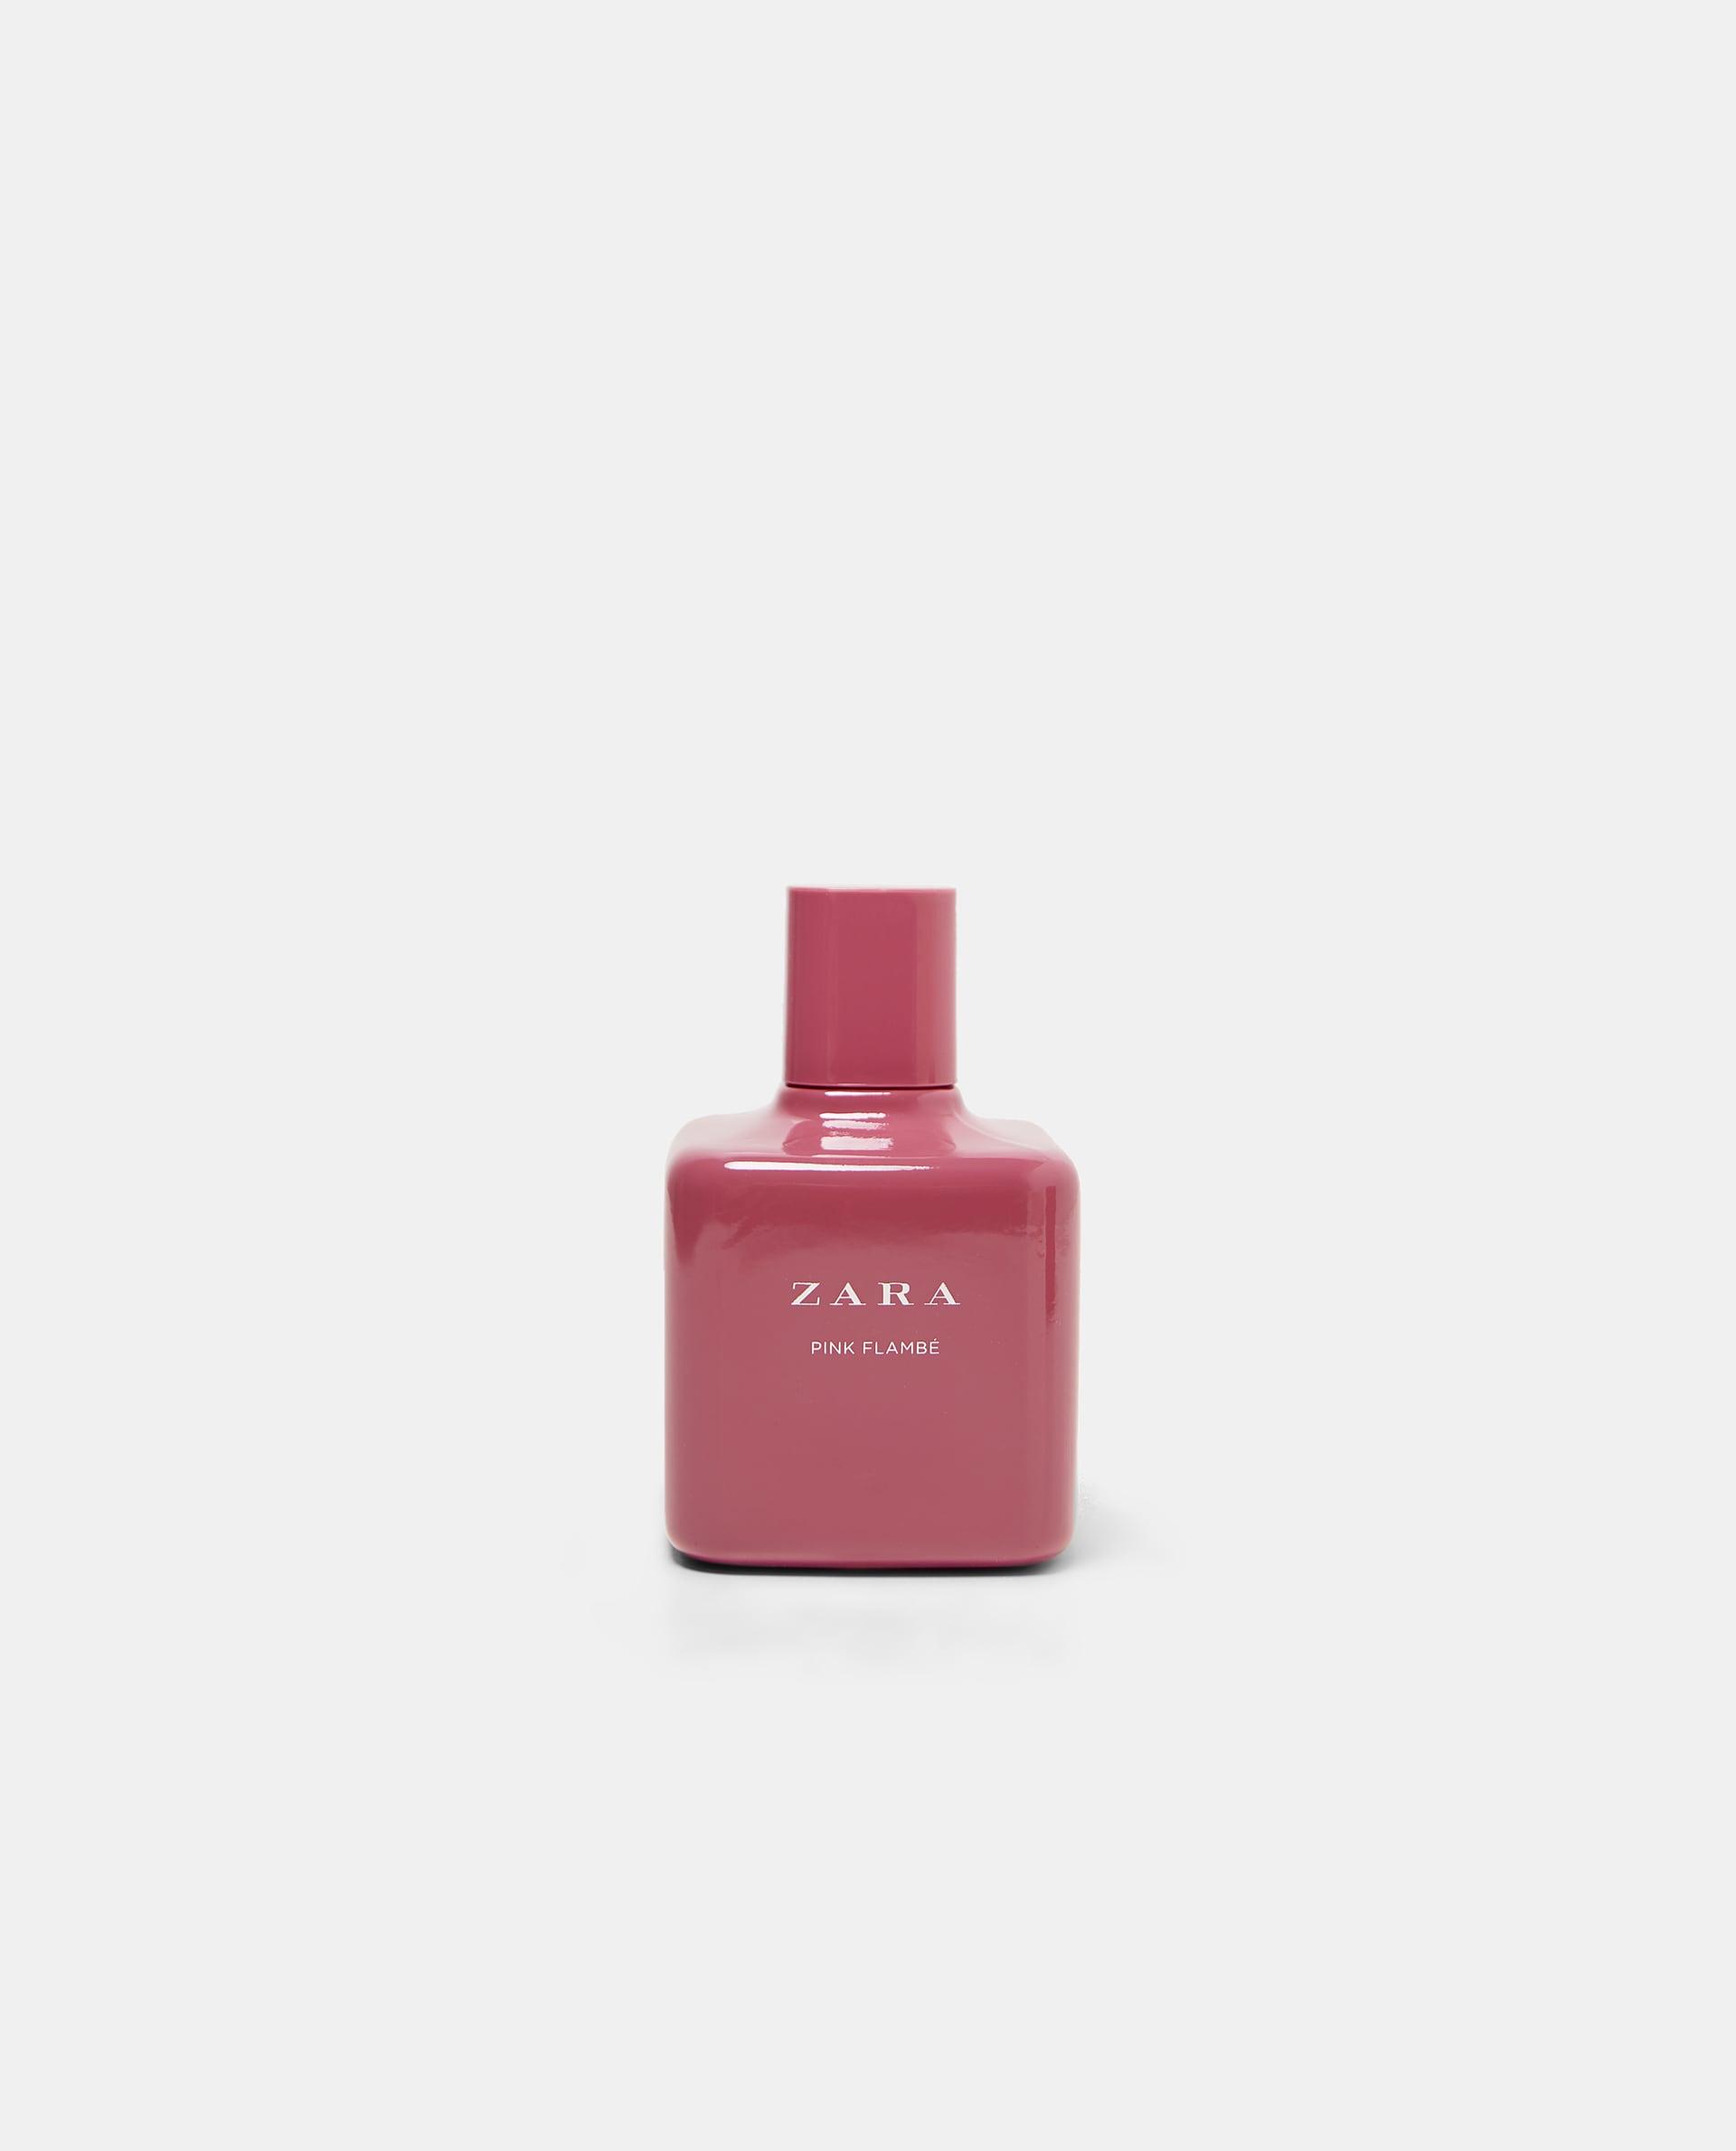 Pink Flambe Zara perfume - a fragrance for women 2018